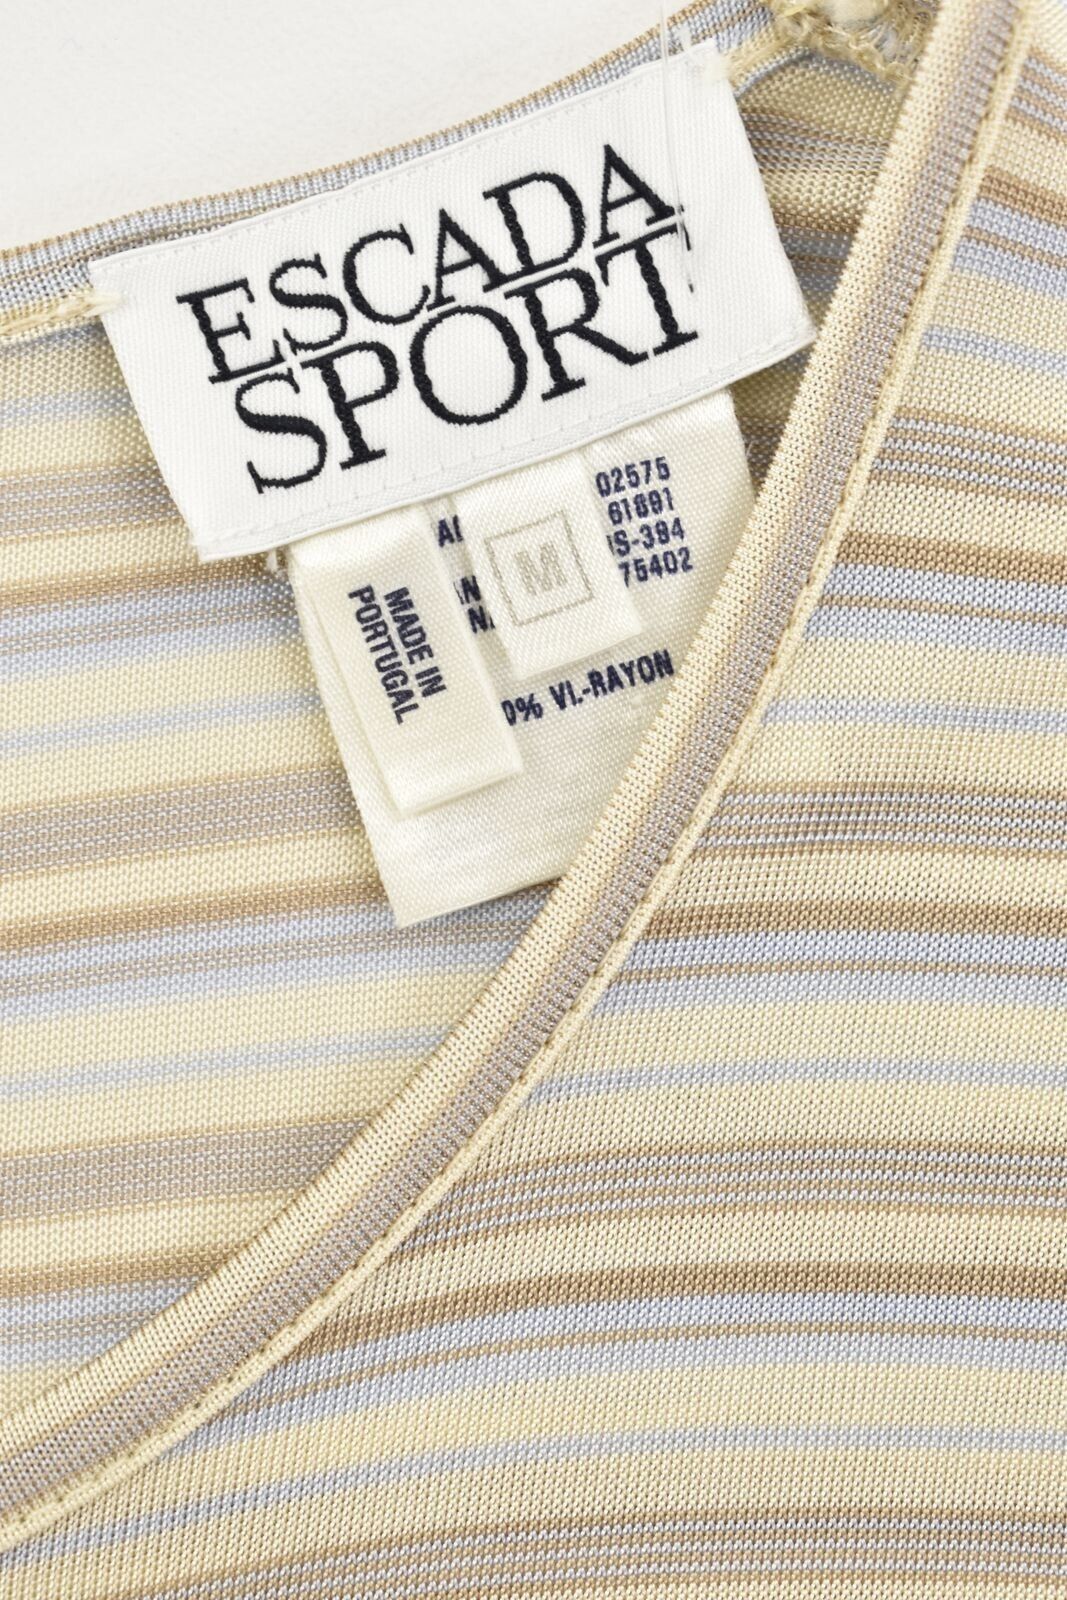 ESCADA Blue Cream Taupe Striped Crew Neck Top Shirt / SIZE Medium M / Portugal